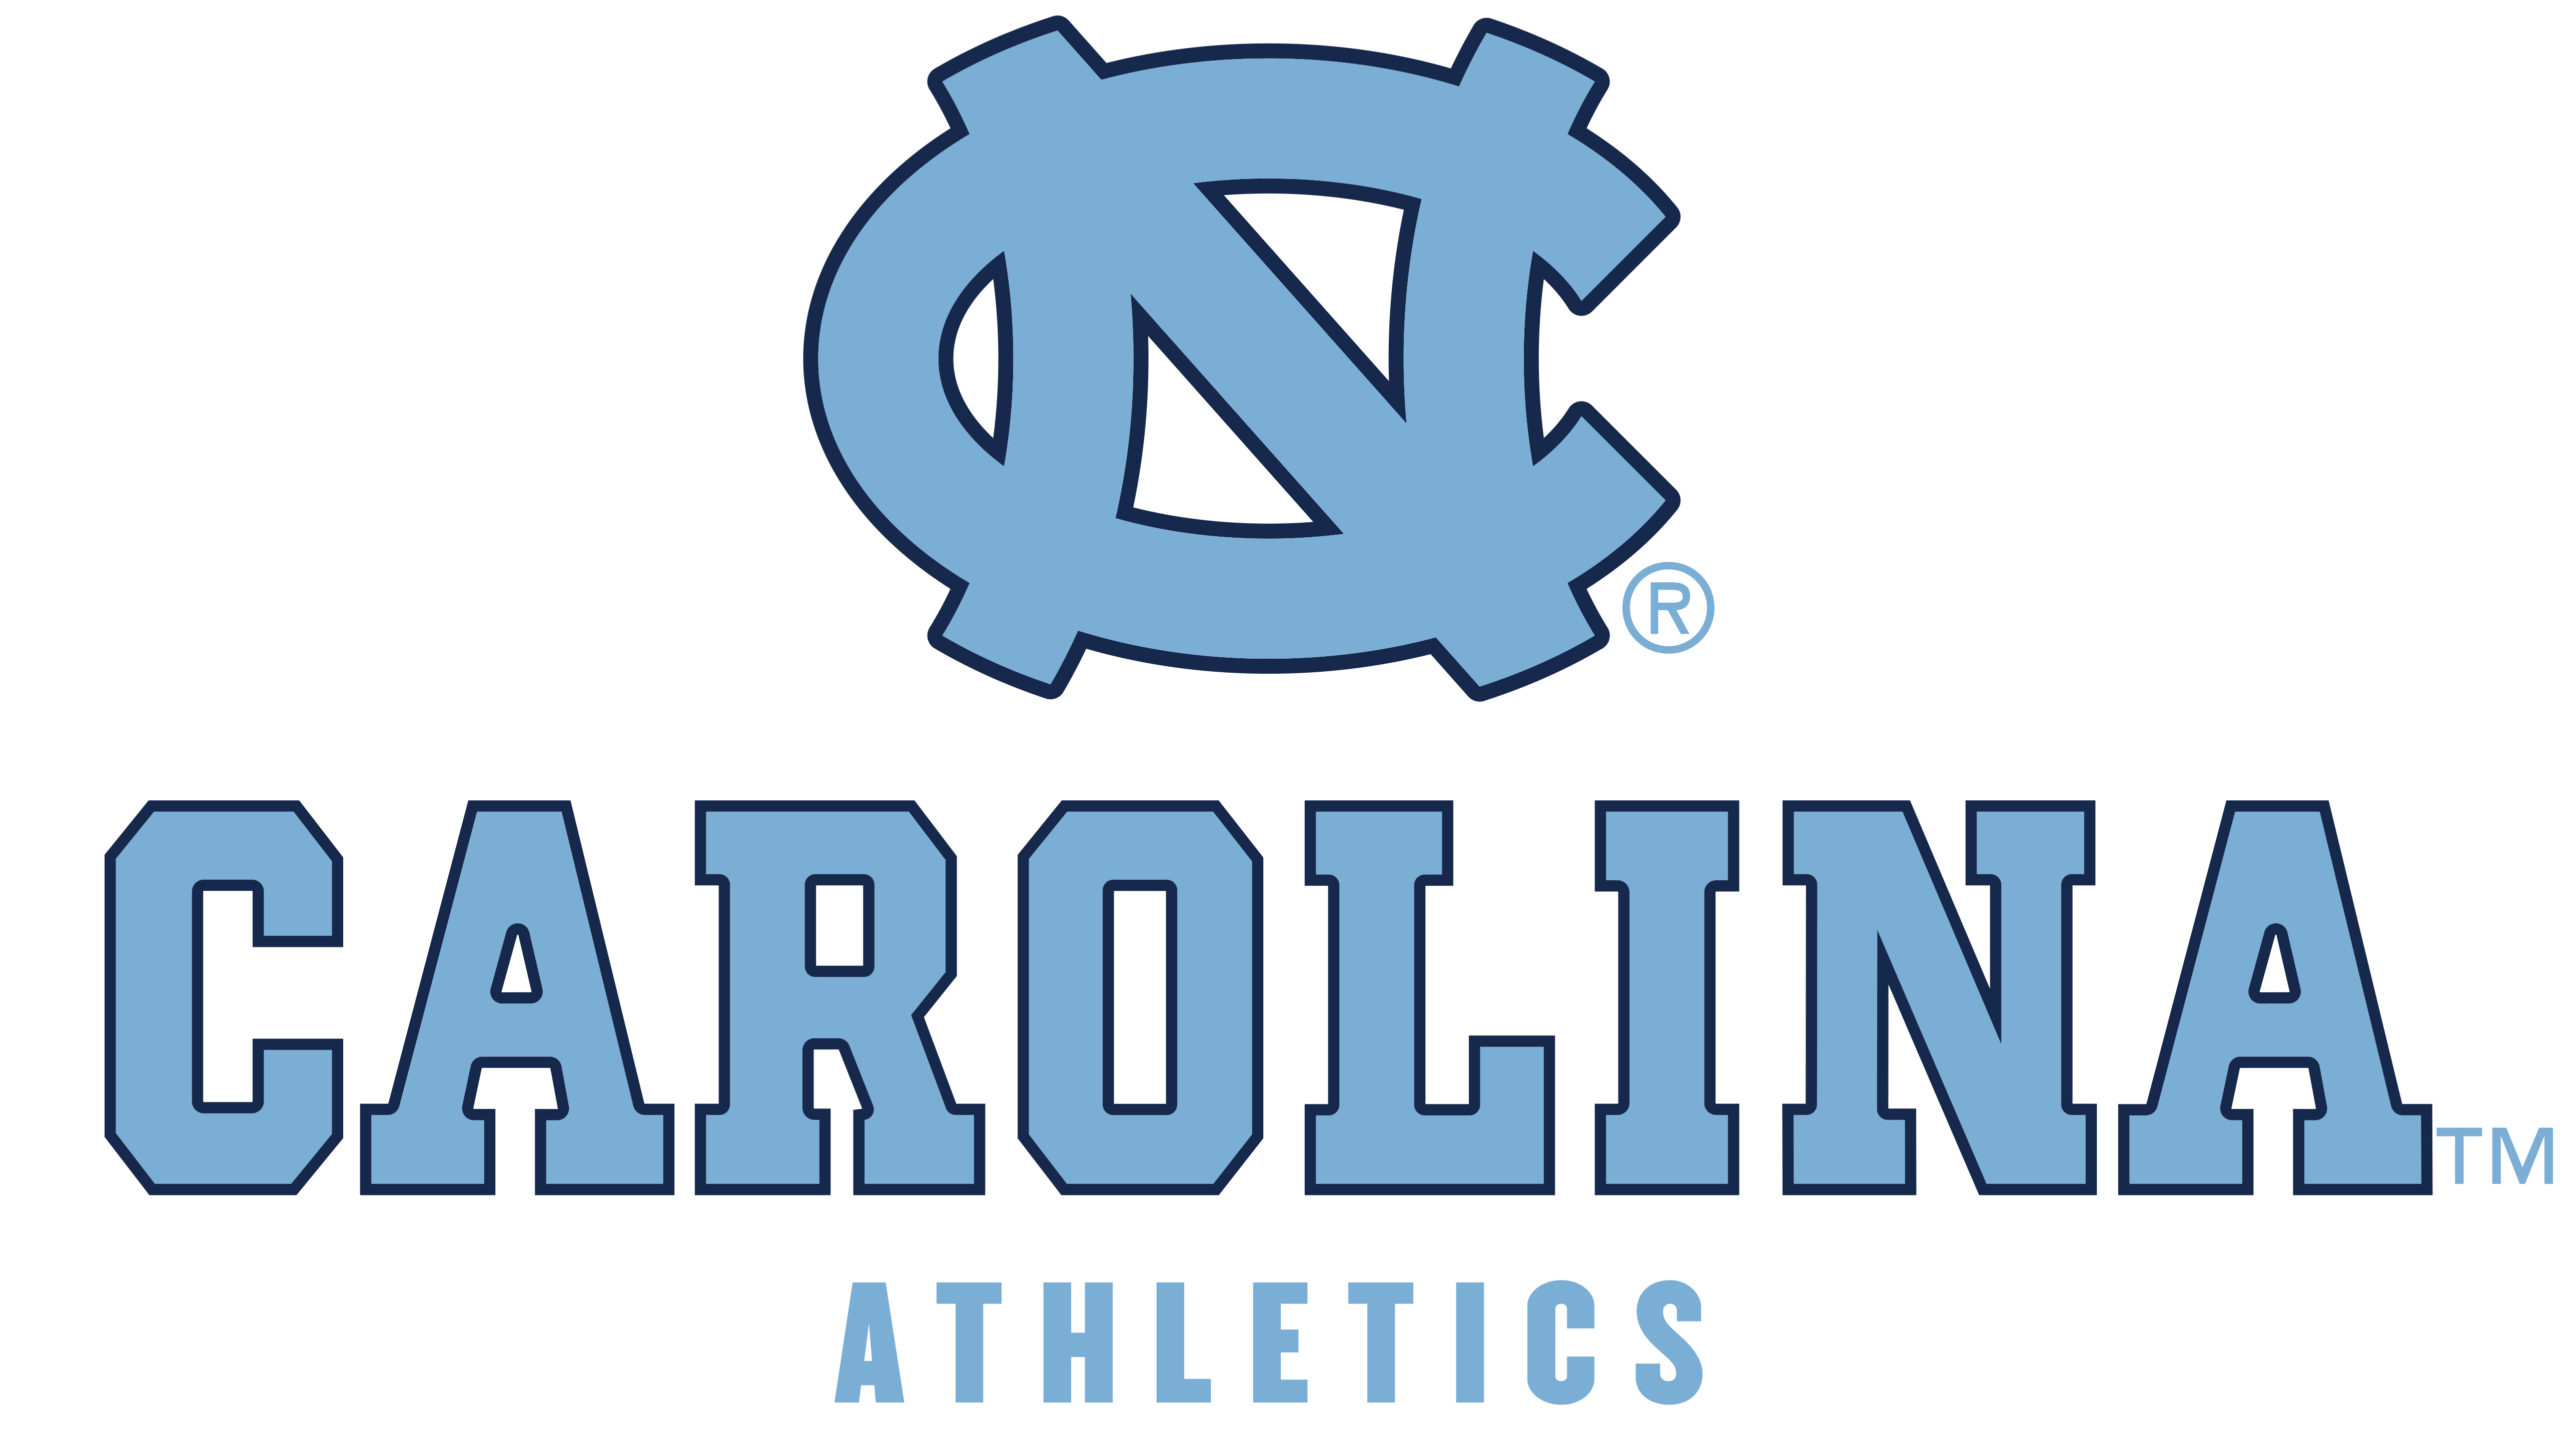 University of North Carolina Athletics